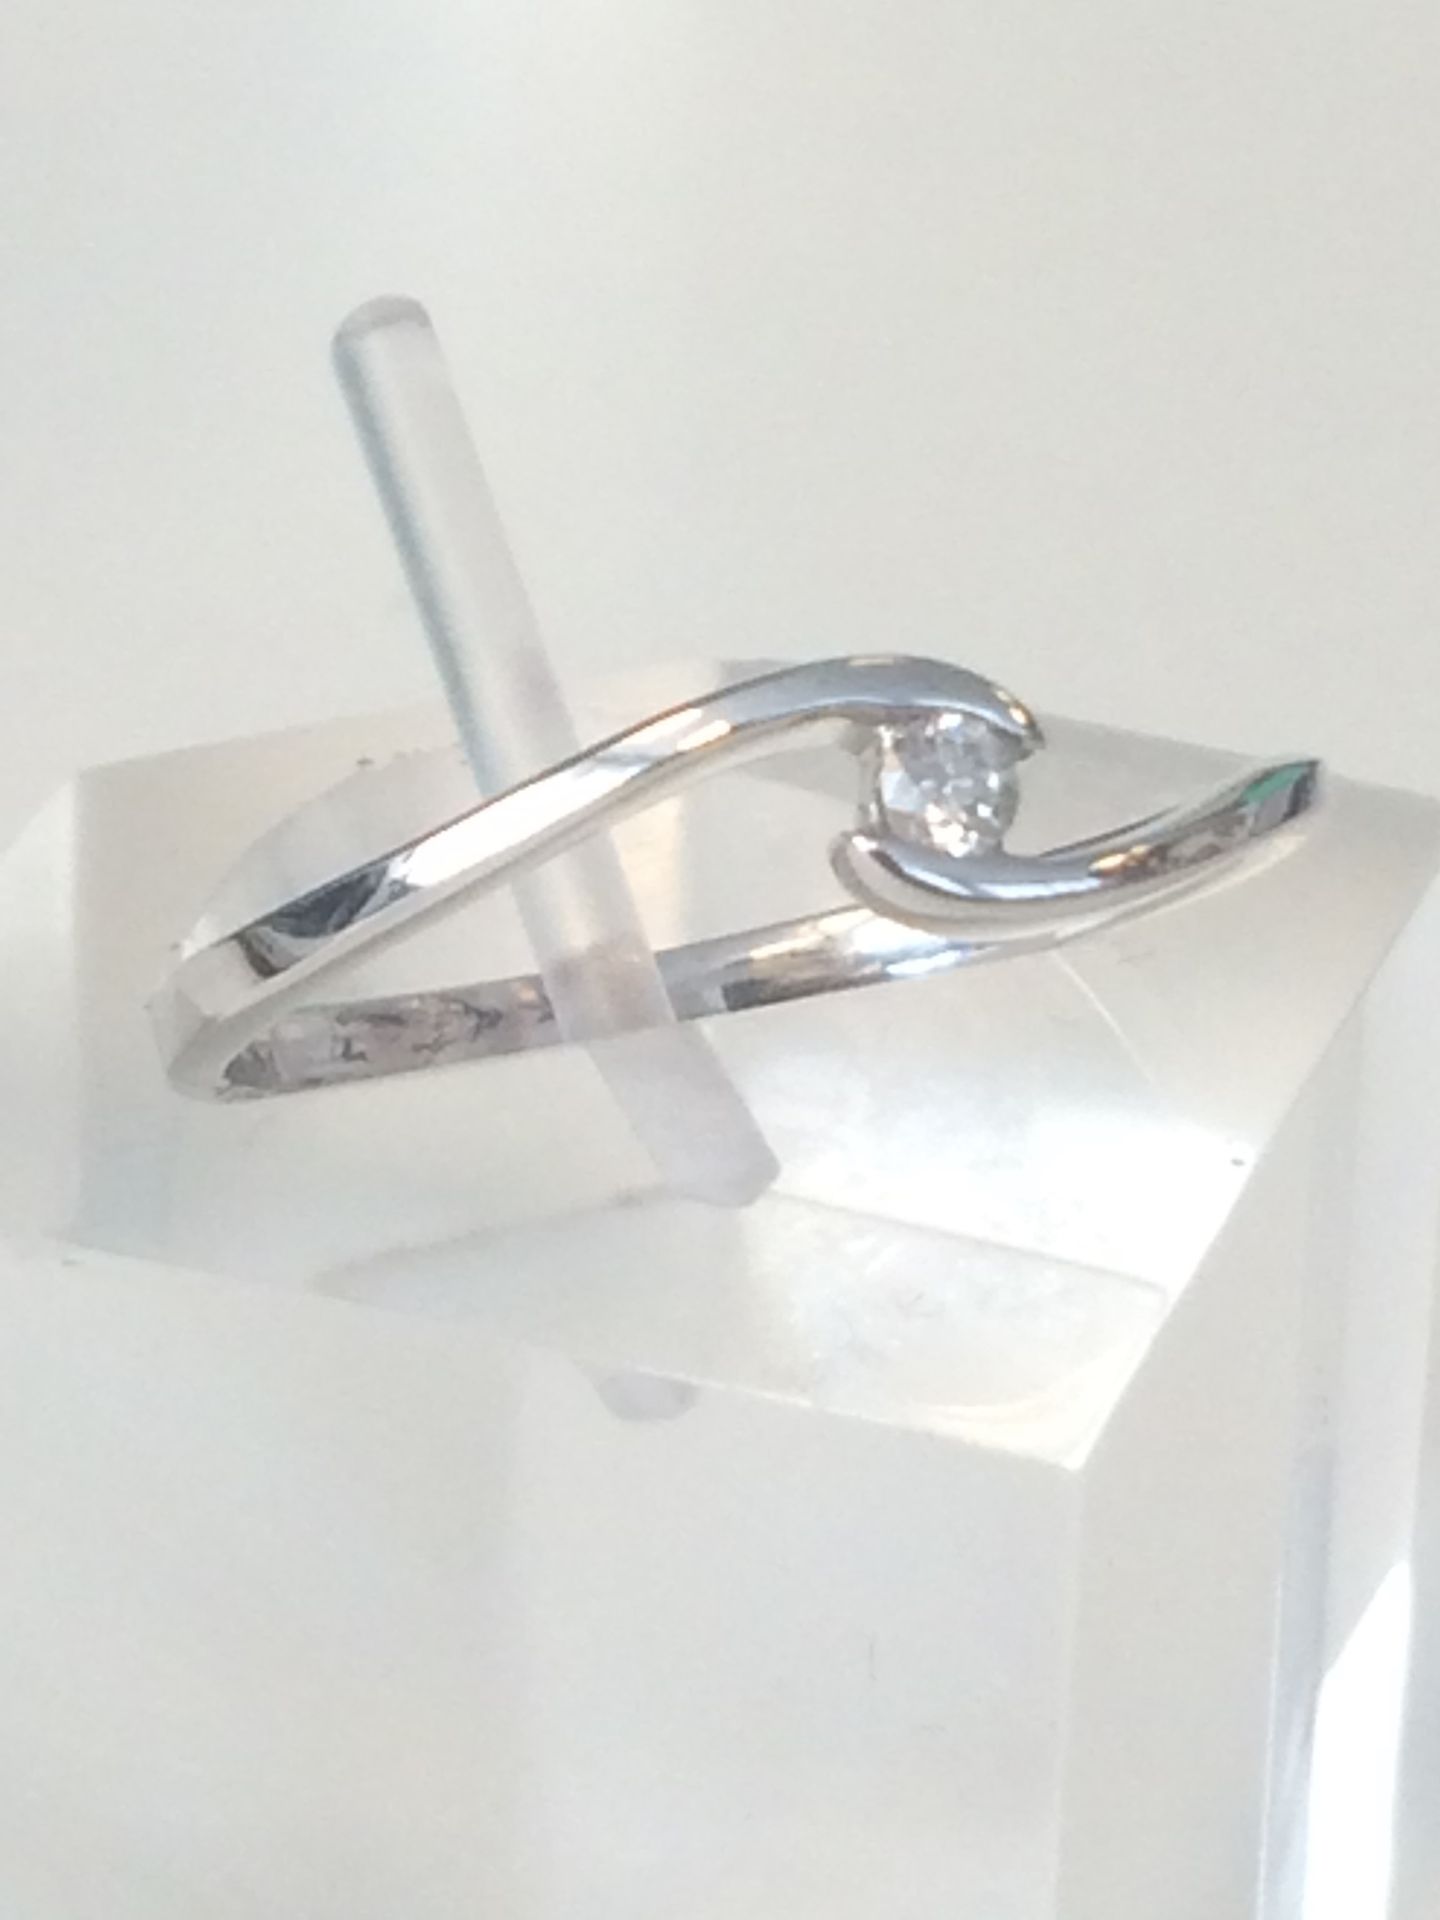 Ladies White Gold Solitaire Diamond RingLadies White Gold Solitaire Diamond Ring - Image 2 of 2